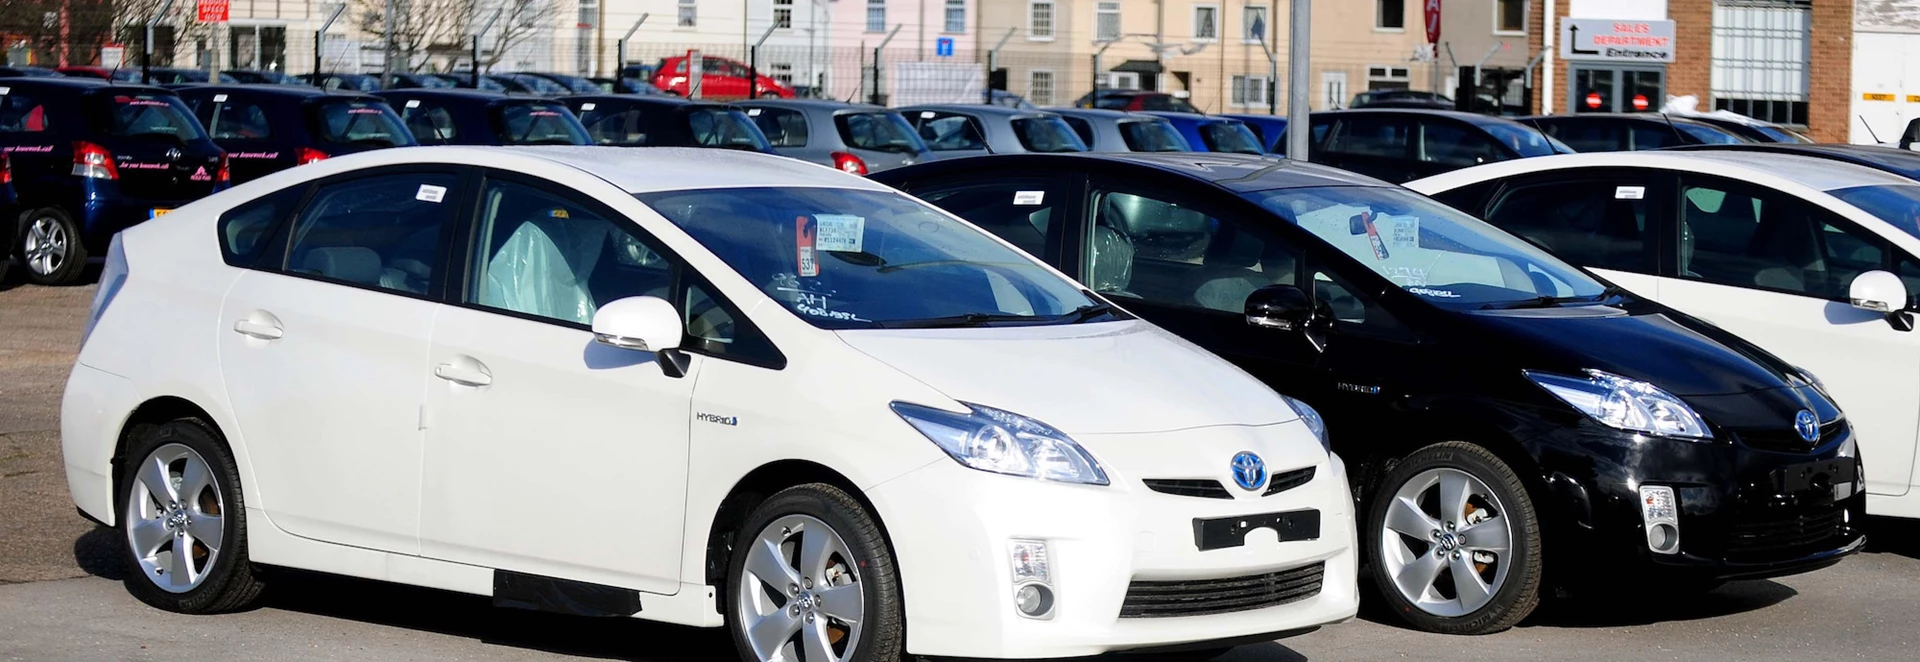 Hybrid and electric car sales set to overtake diesel